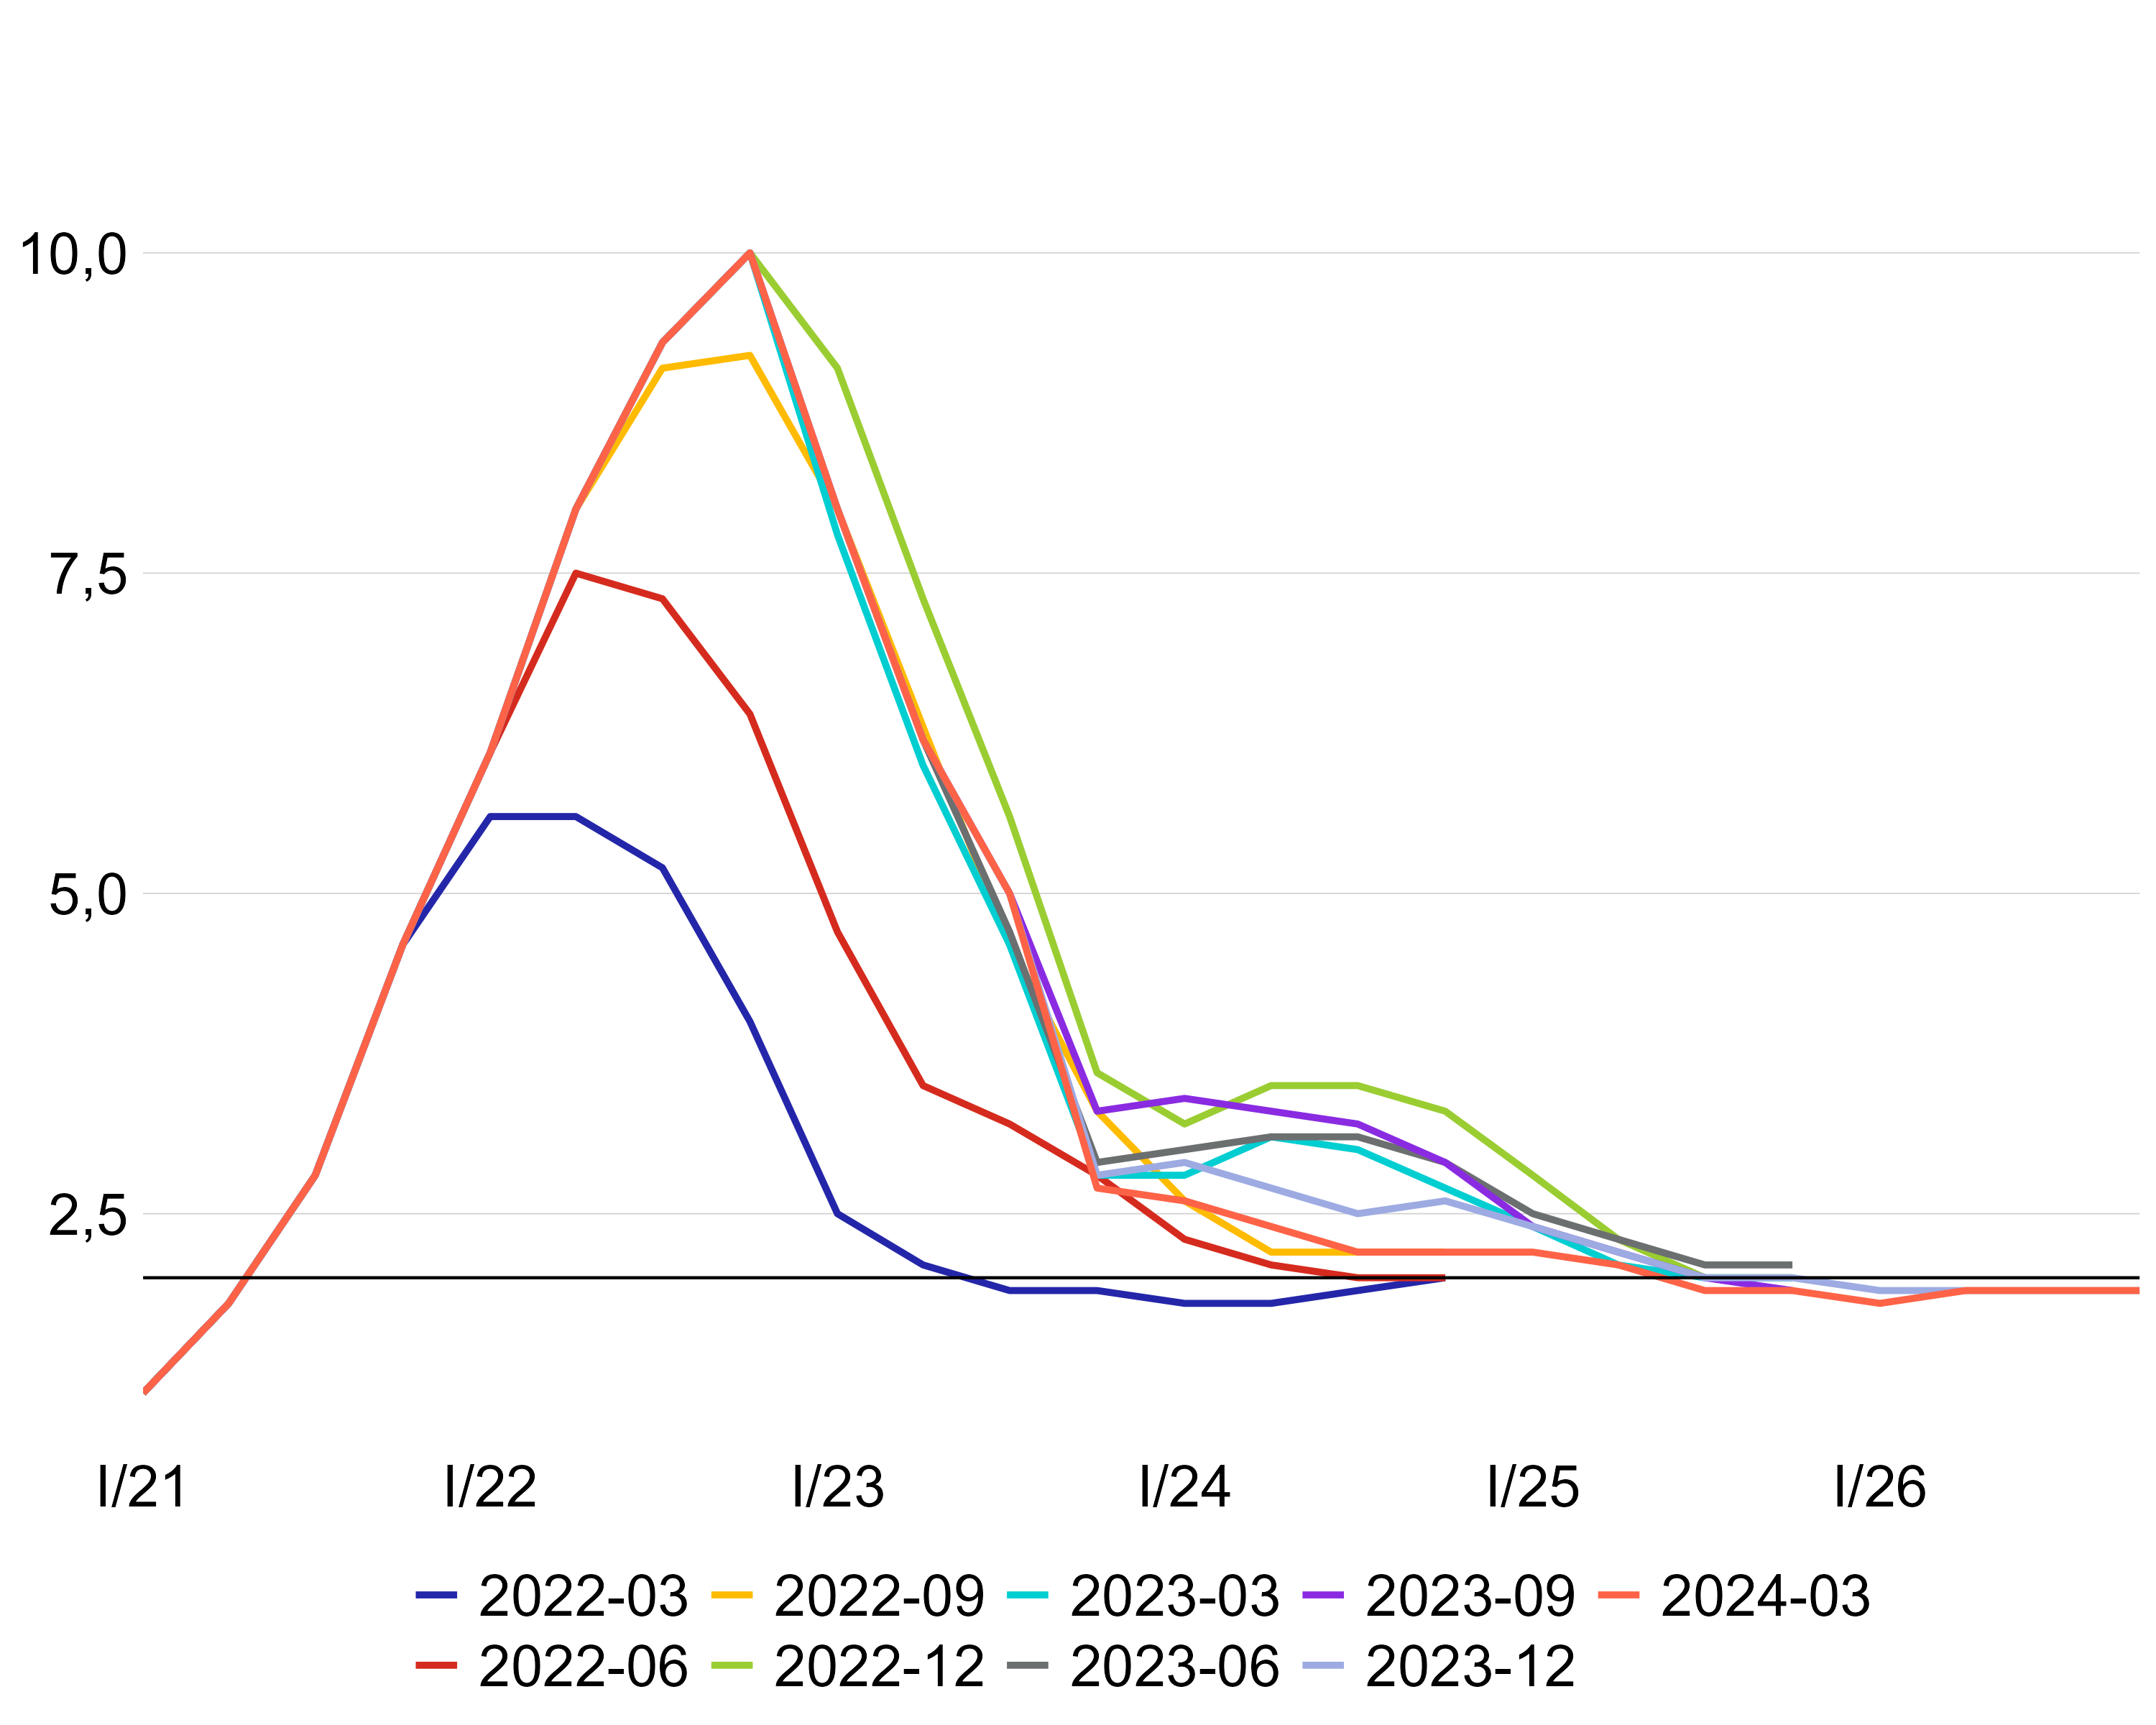 Graf 2 – Prognózy ECB pro inflaci po roce 2021